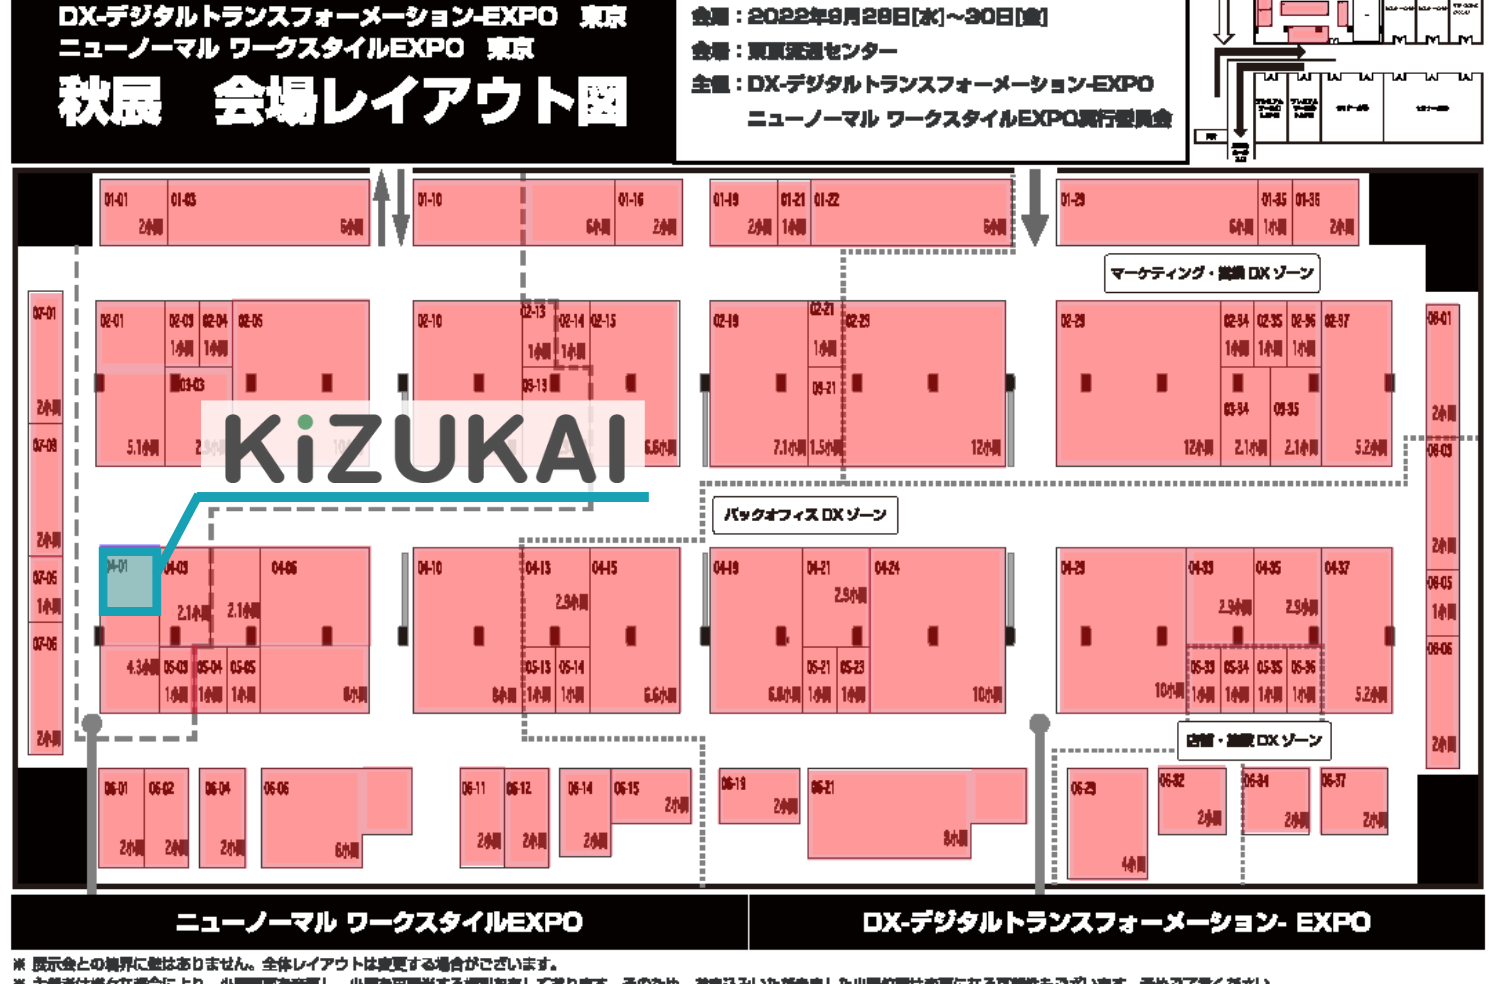 KiZUKAI出展ブース番号：04-01